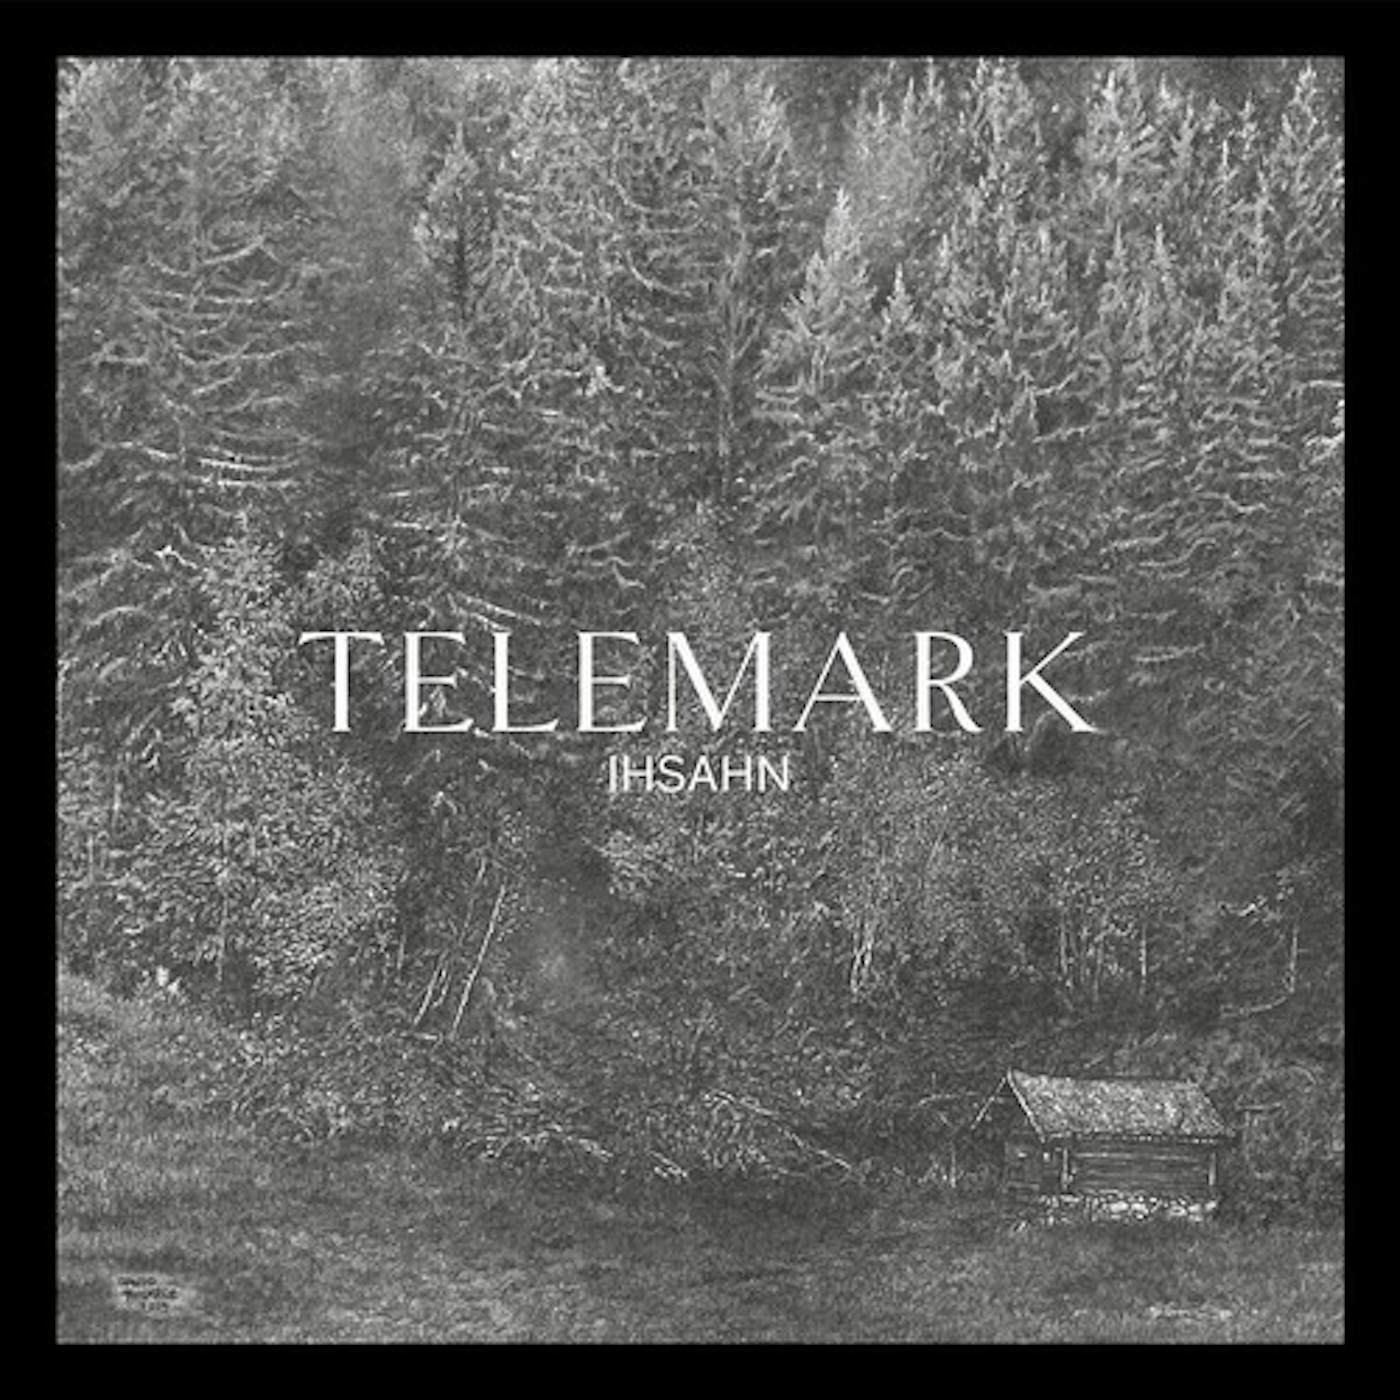 Ihsahn Telemark Vinyl Record